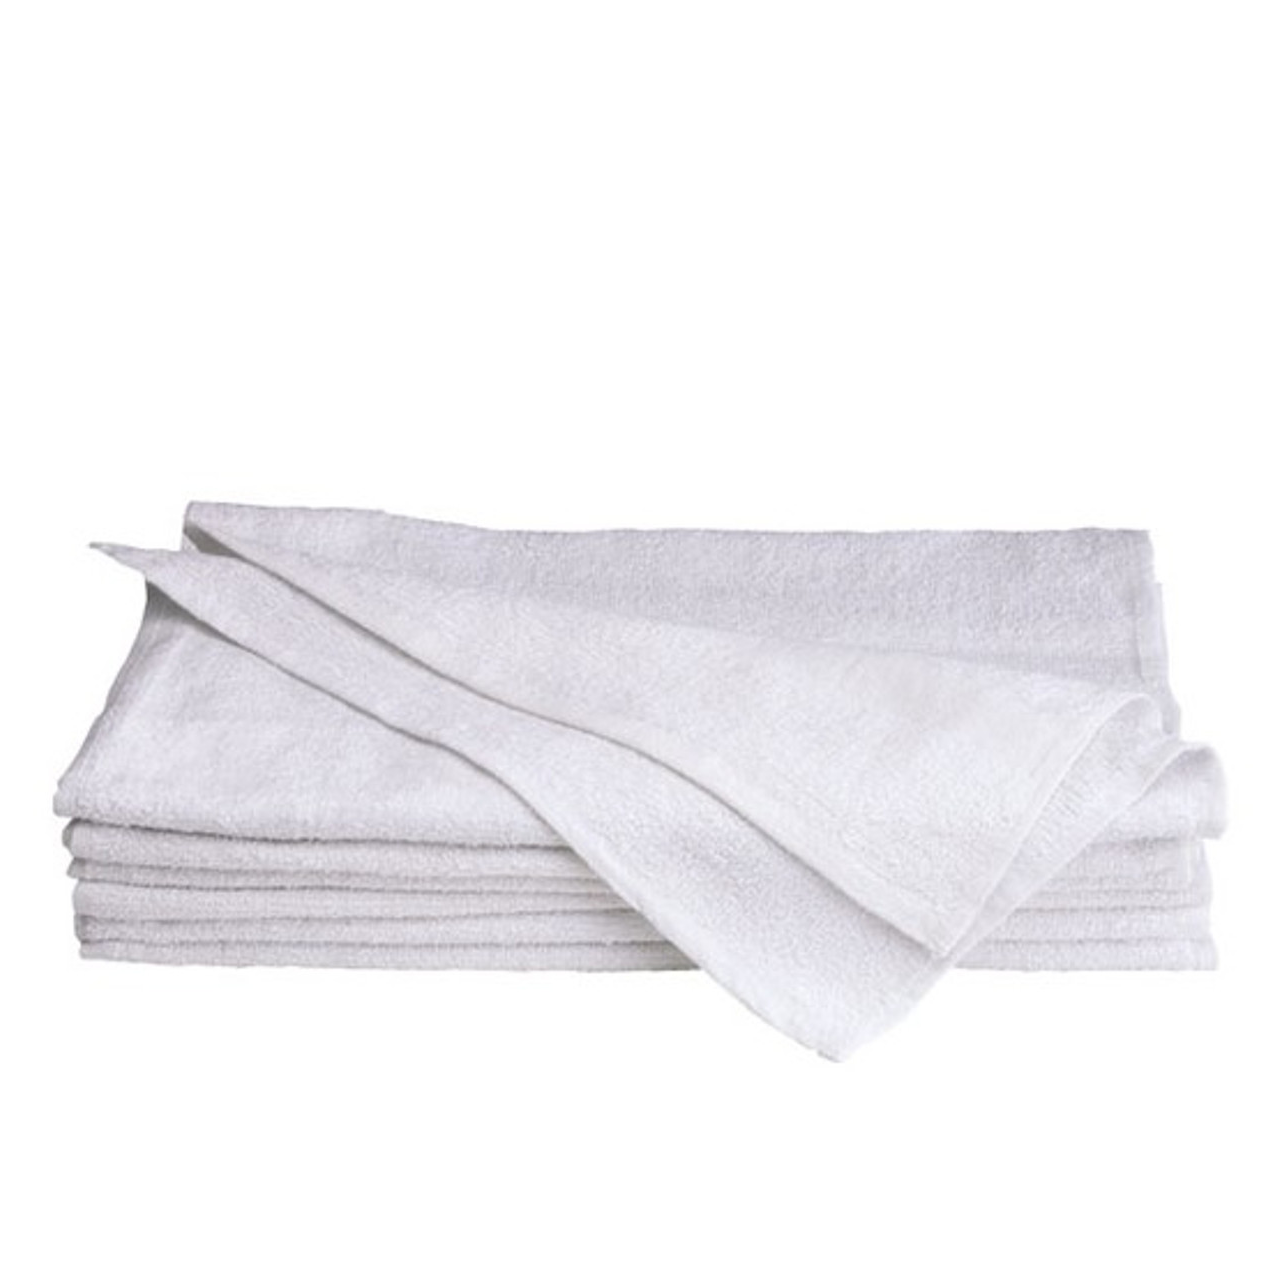 Boss Beauty Supply Elite 3lb White Towels 12 pack - 16 x 27